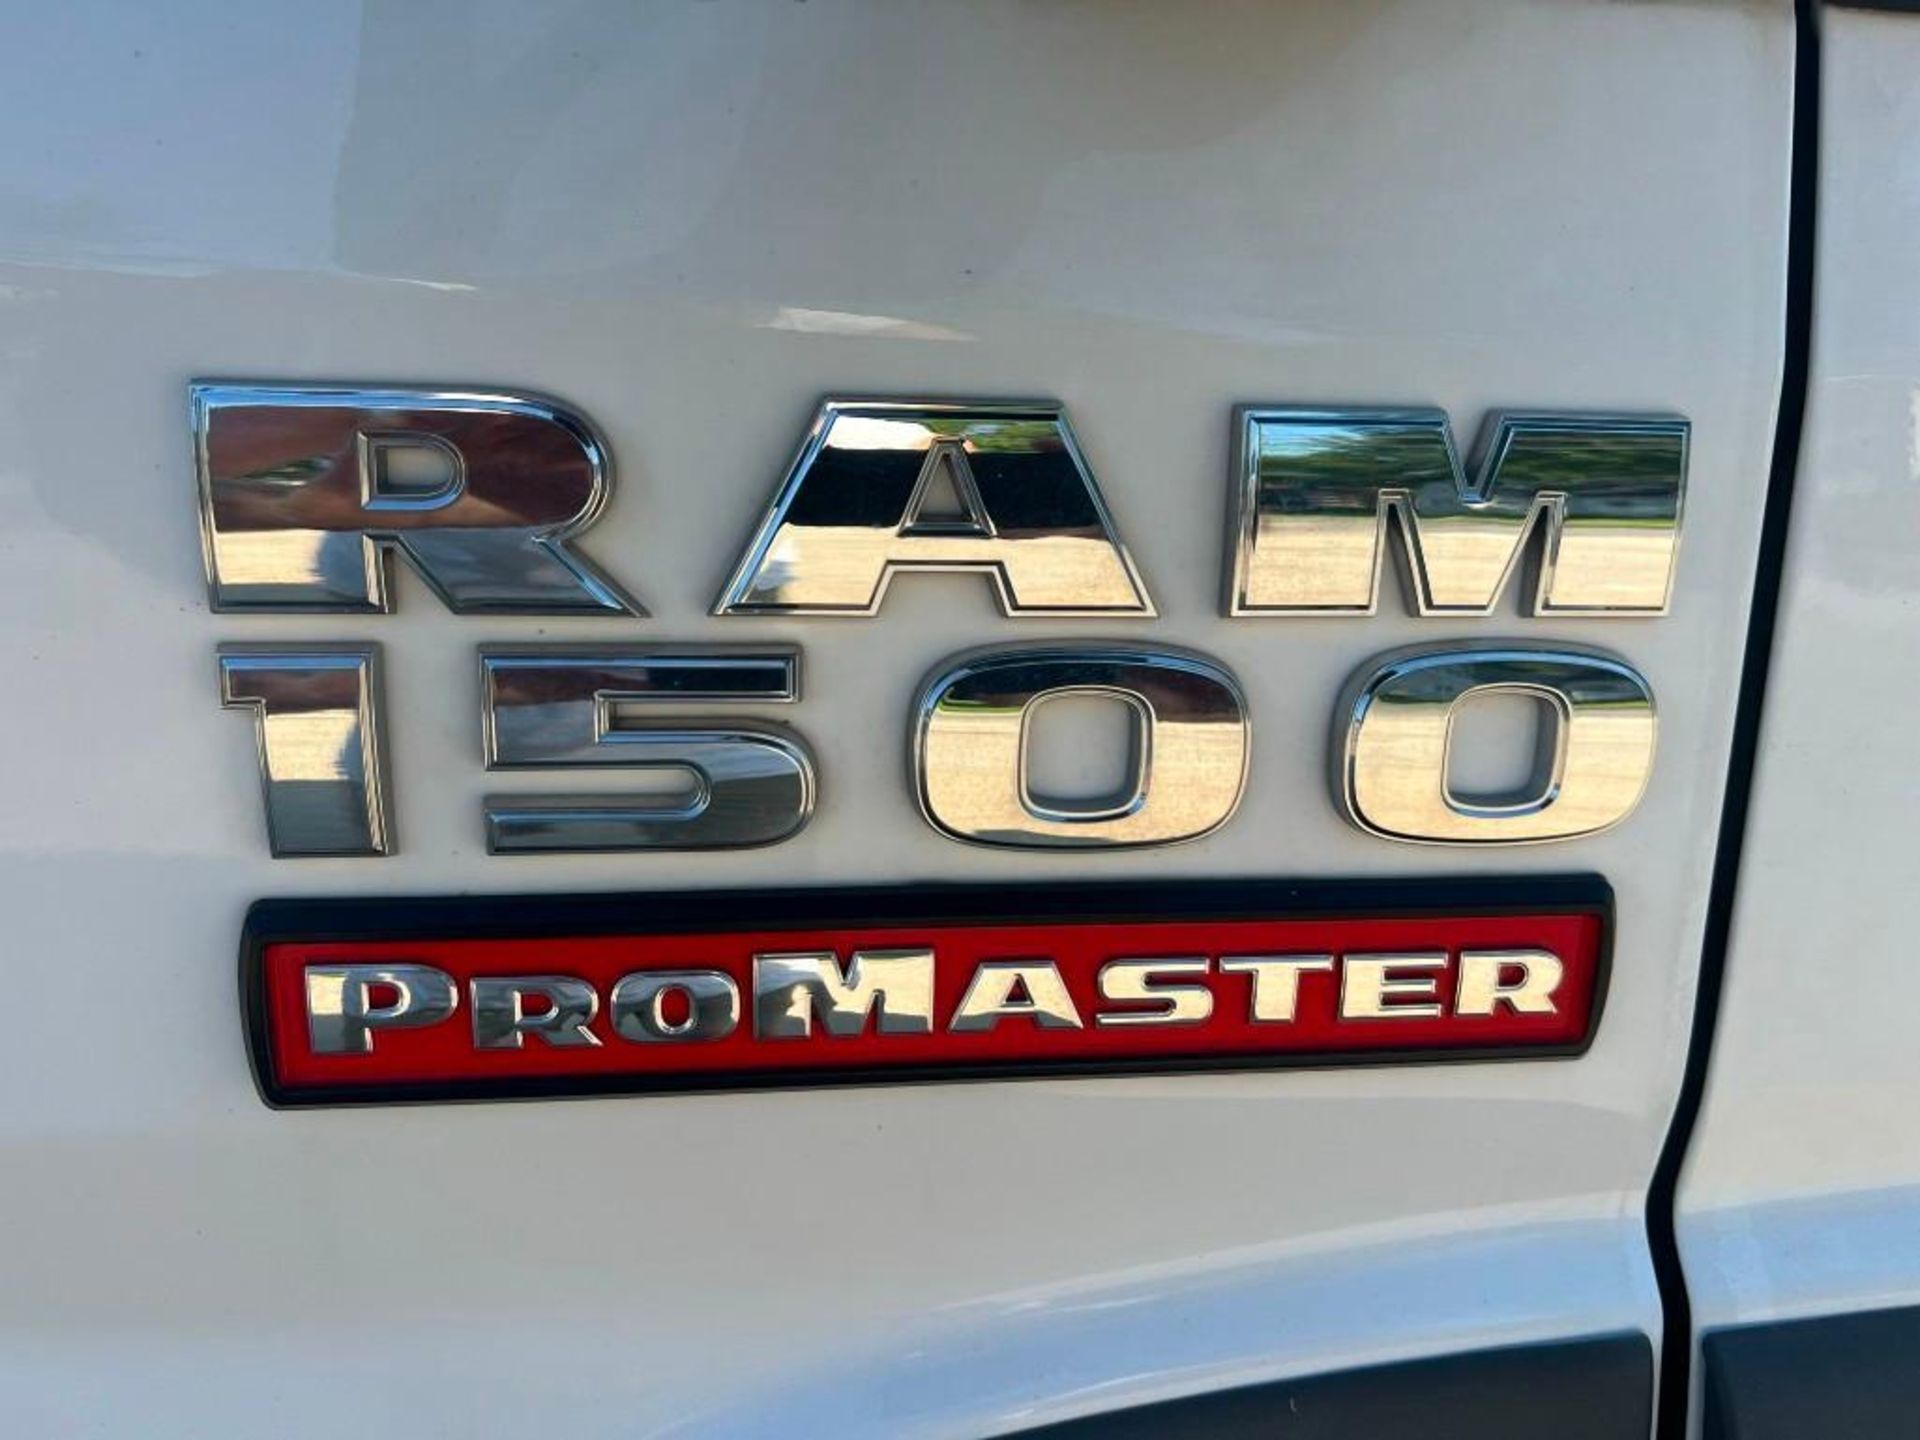 2017 Dodge Ram Promaster 1500 cargo van, 3.6L, automatic transmission, miles: 112k, VIN: - Image 10 of 23